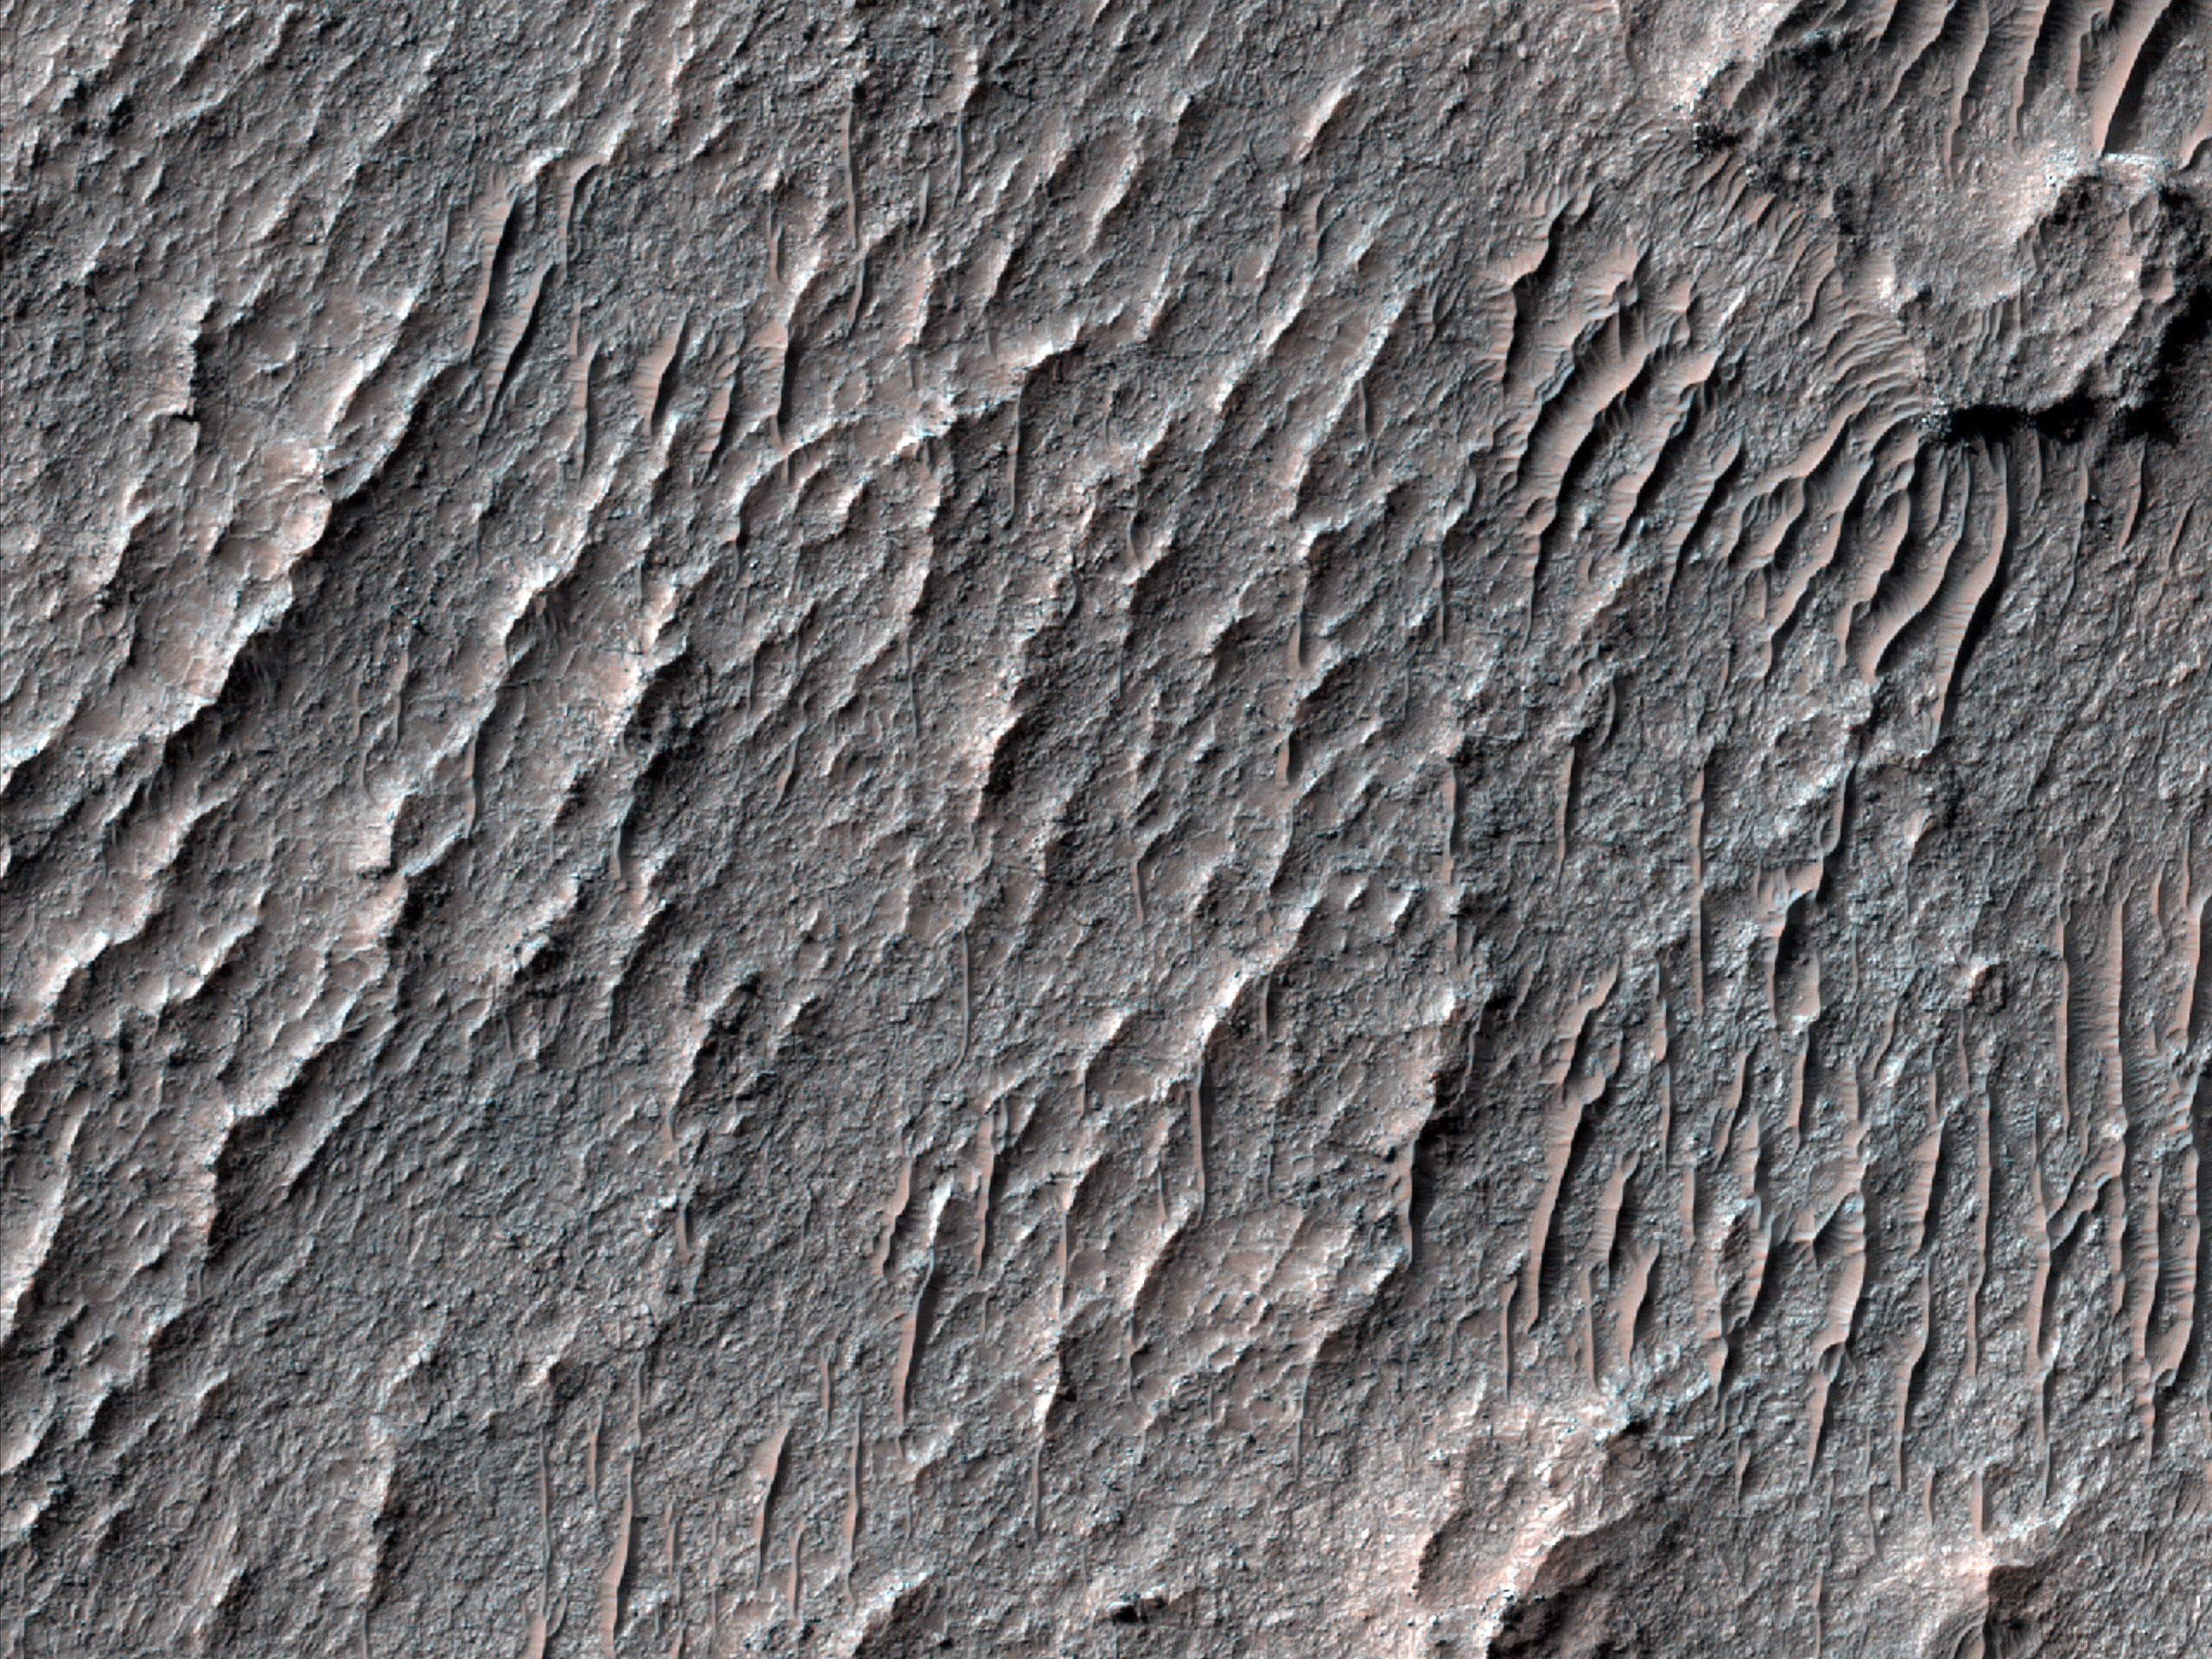 Potentially Layered Bedrock Deposits in Terra Sabaea